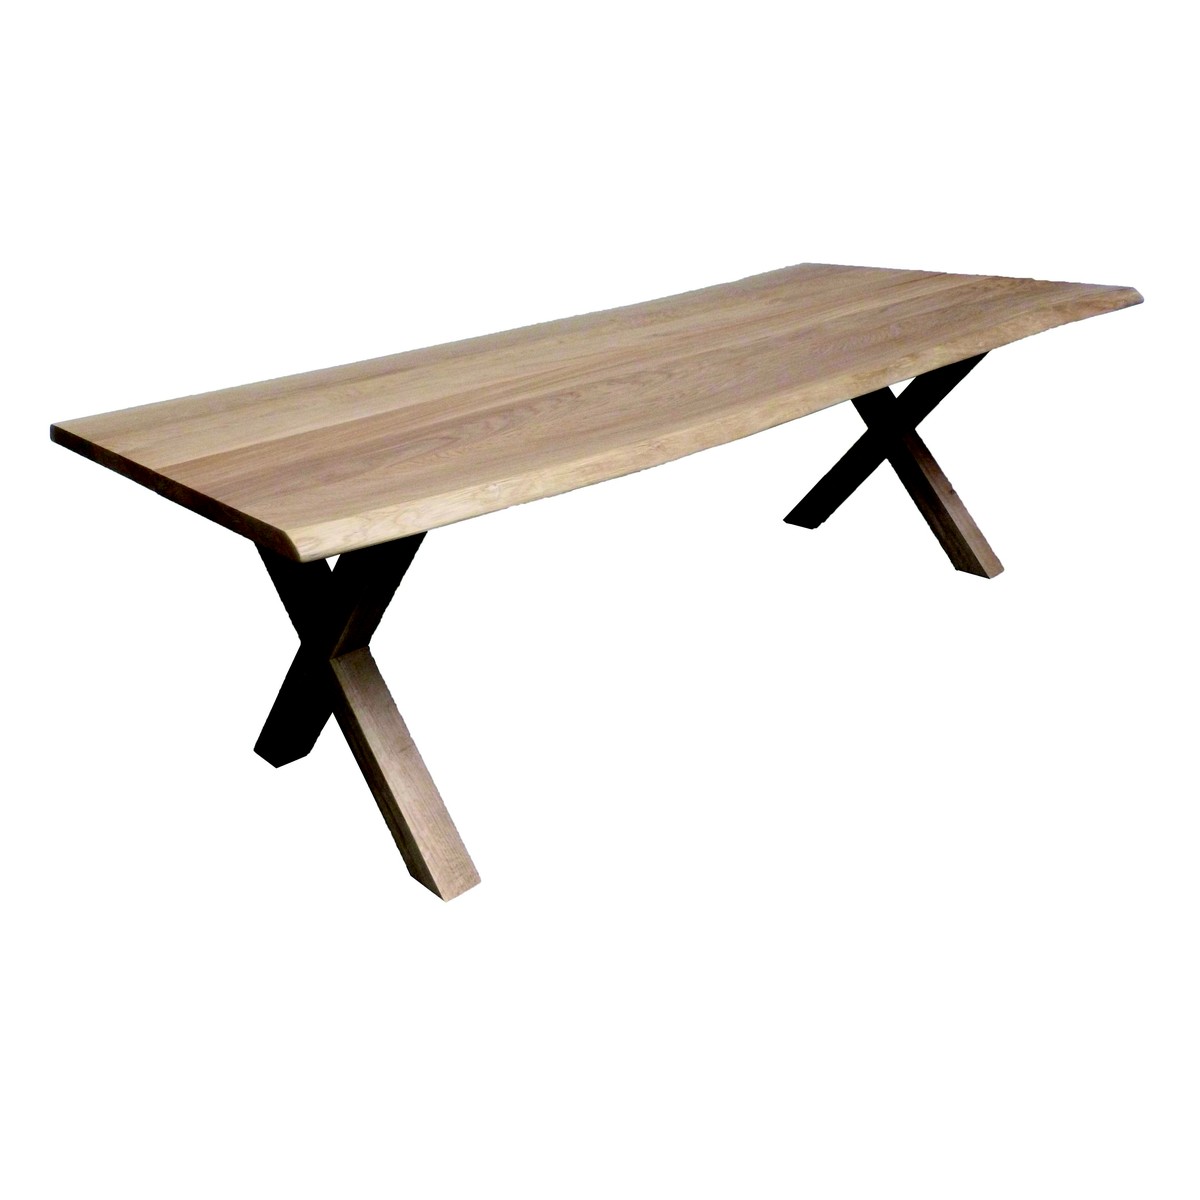   Table haute Mano Trunk ouverte rectangulaire  160x100x90cm